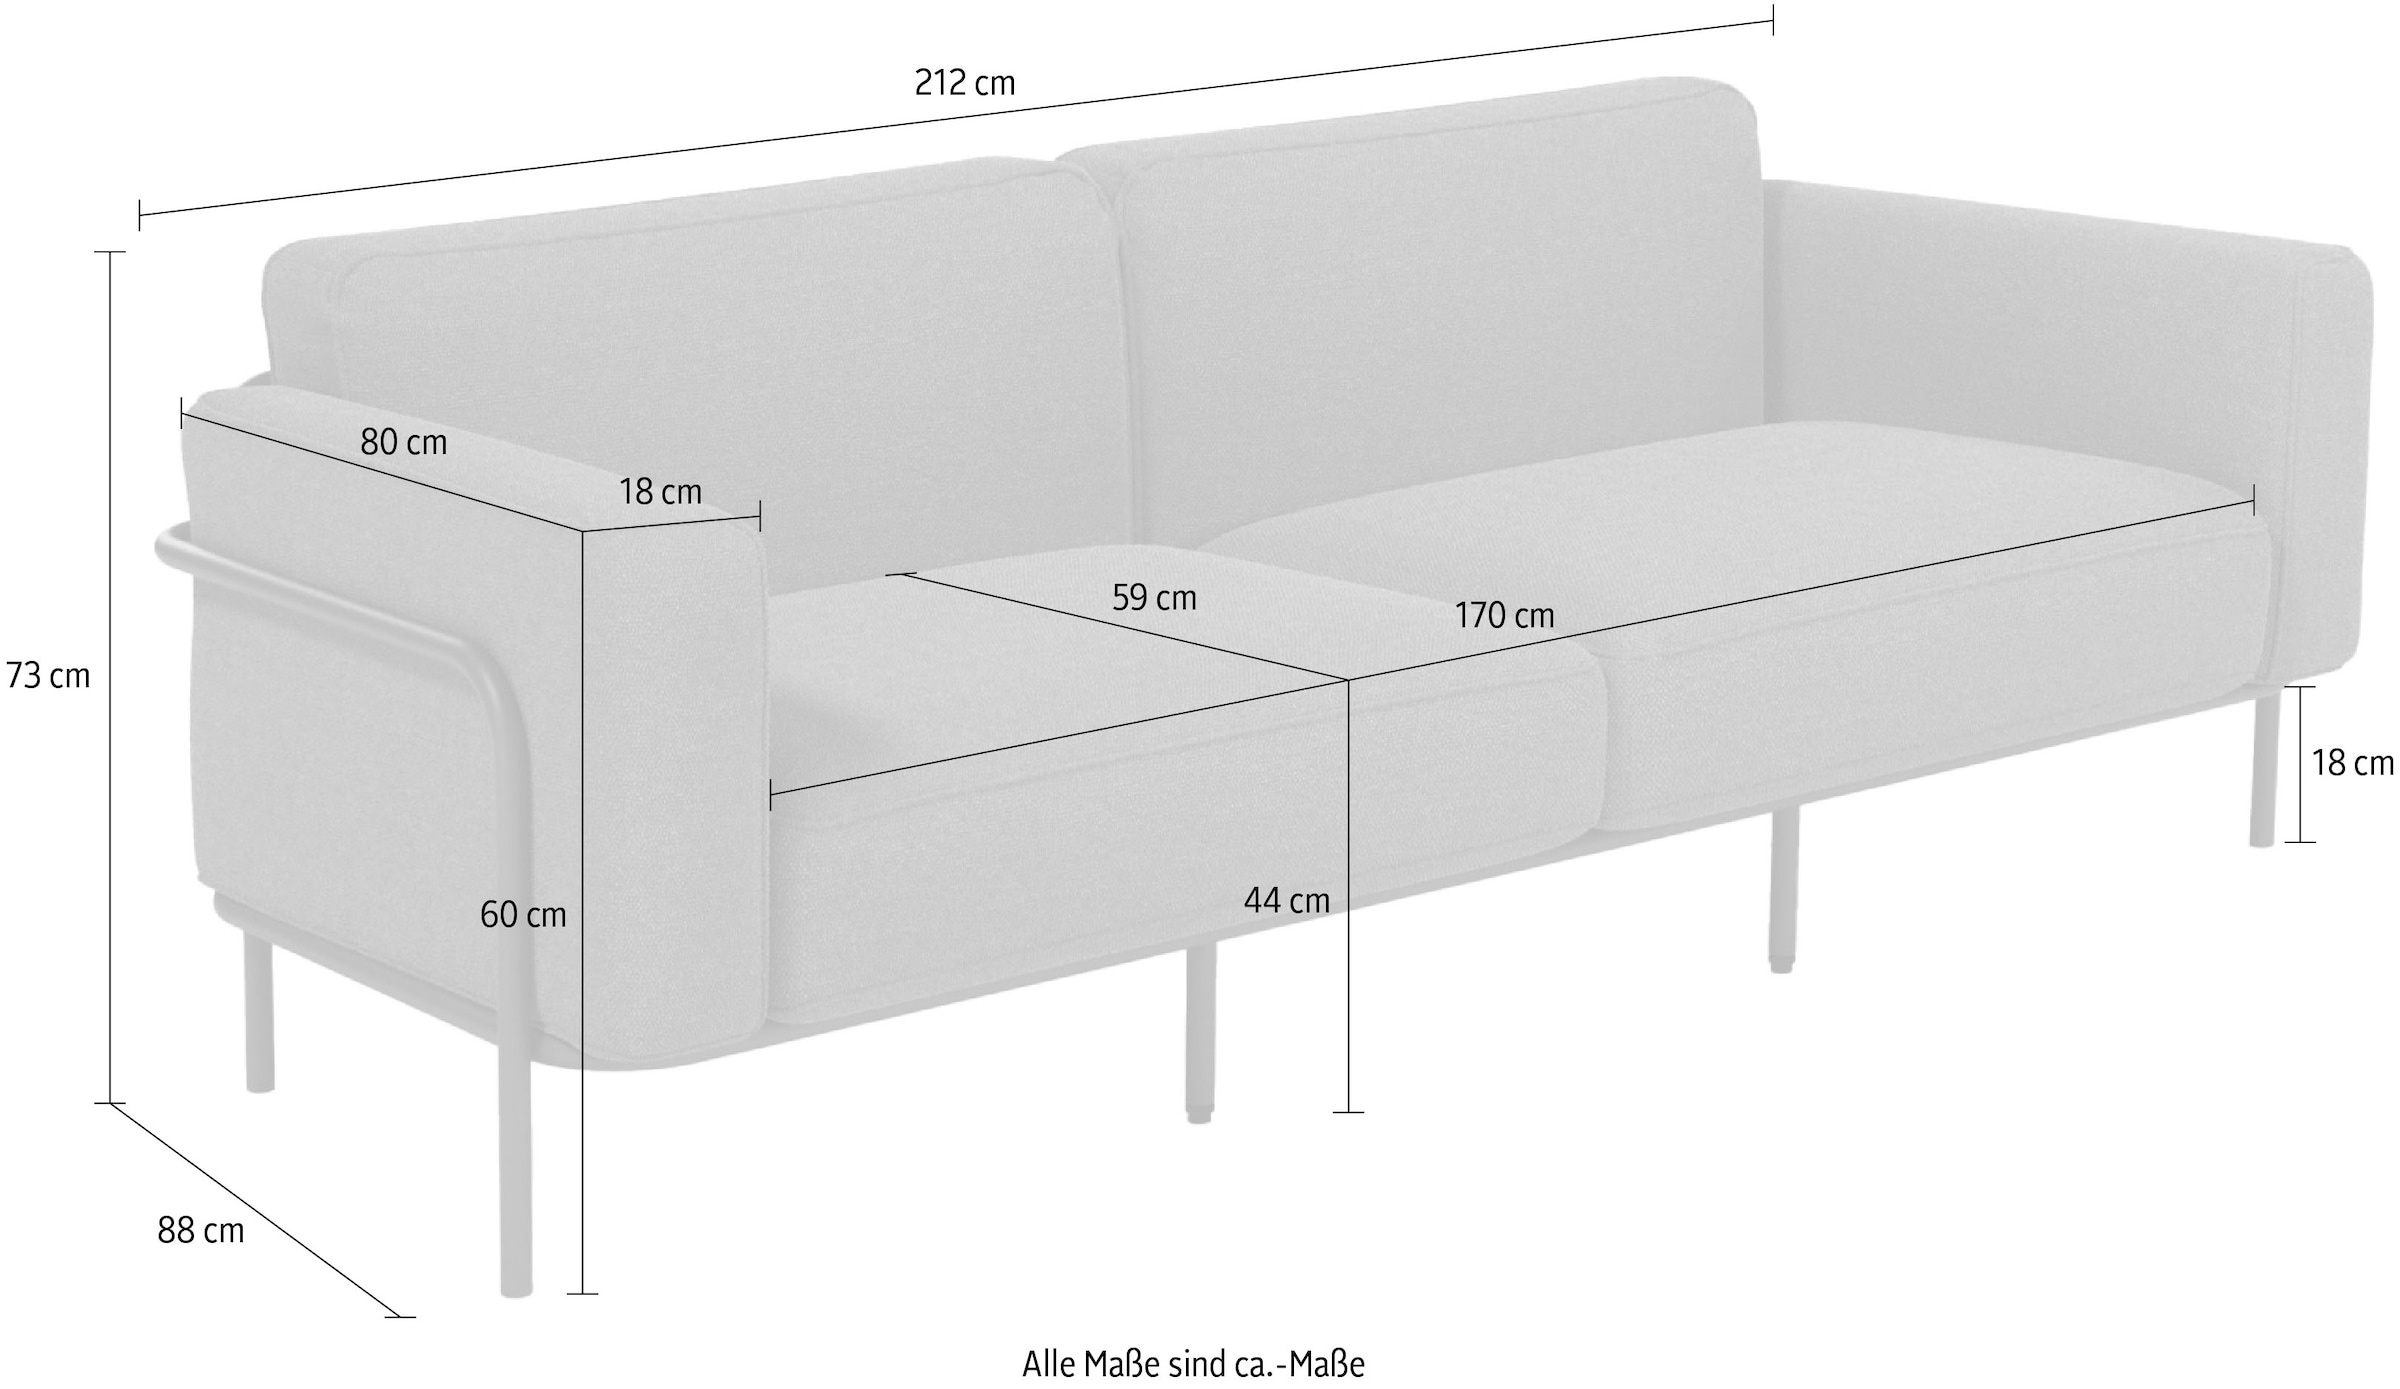 andas 3-Sitzer »Askild«, Outdoor Gartensofa, wetterfeste Materialien, Breite 212 cm